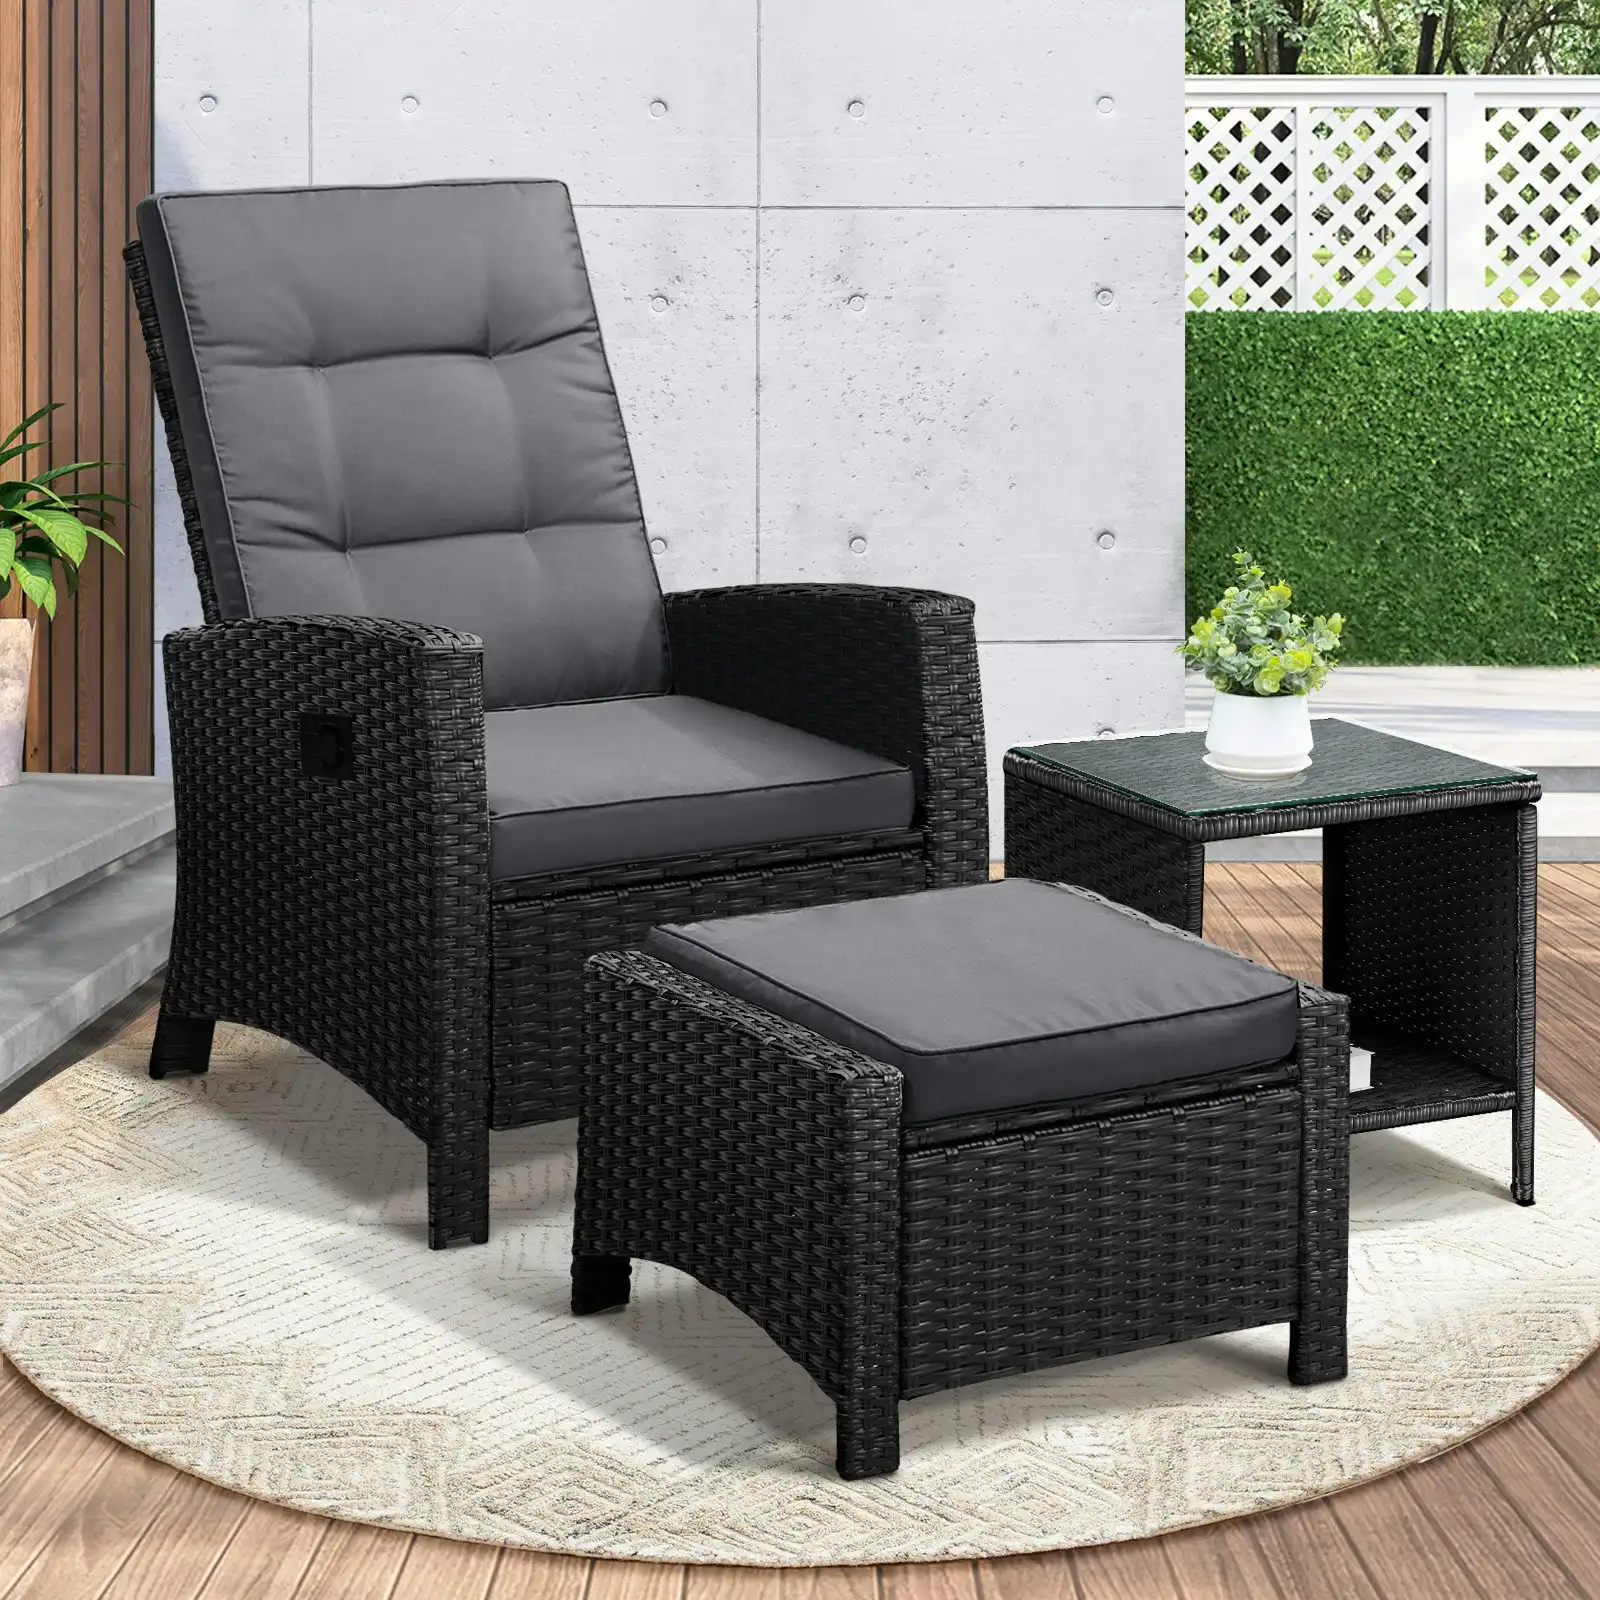 Livsip Recliner Chairs & Table Outdoor Furniture Wicker Sofa Patio Set Garden